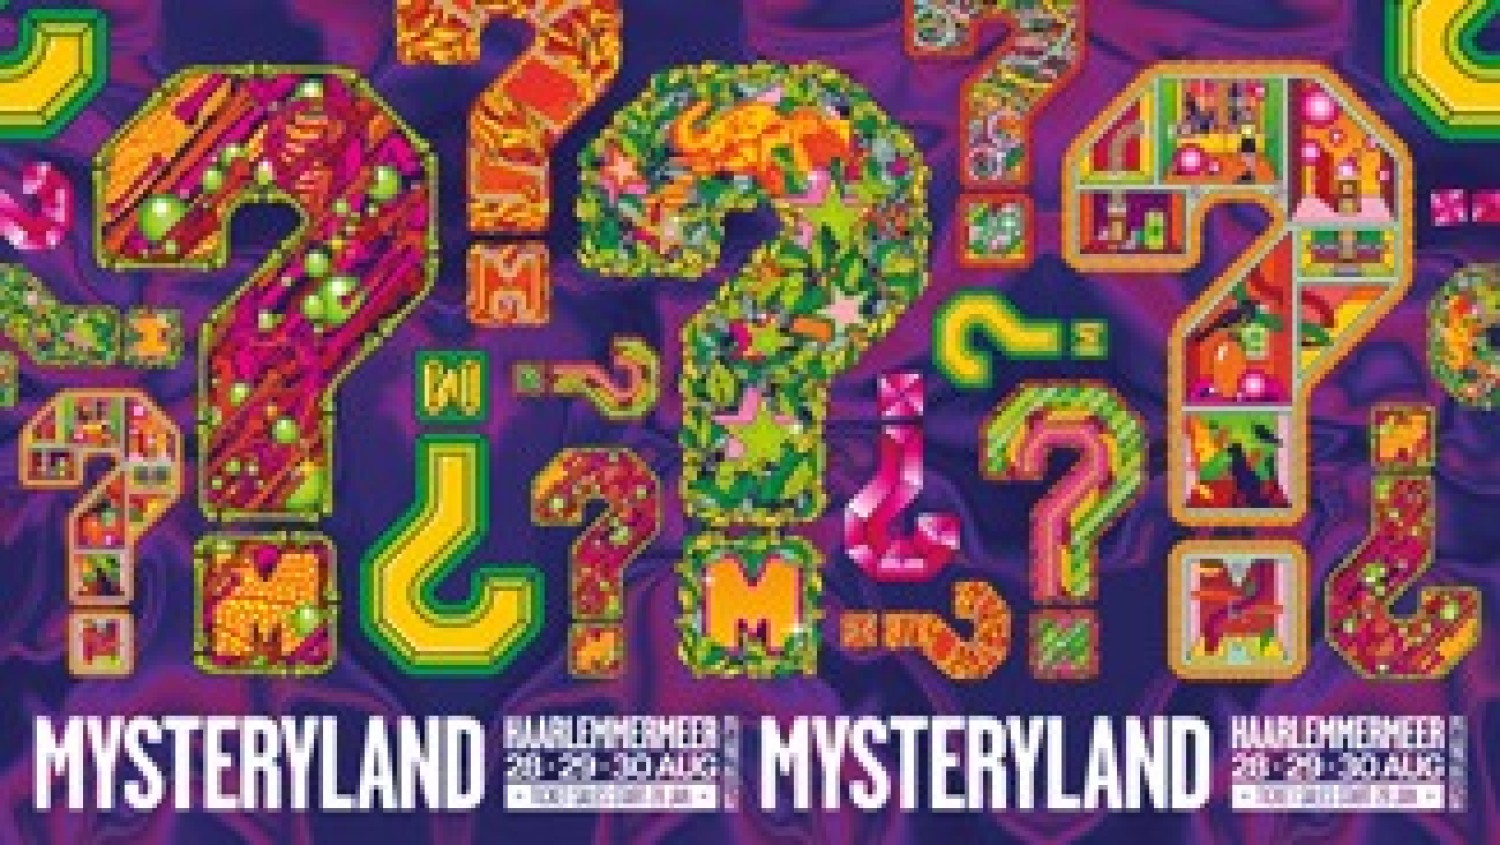 Party nieuws: Early Birds Mysteryland vanaf 28 januari verkrijgbaar